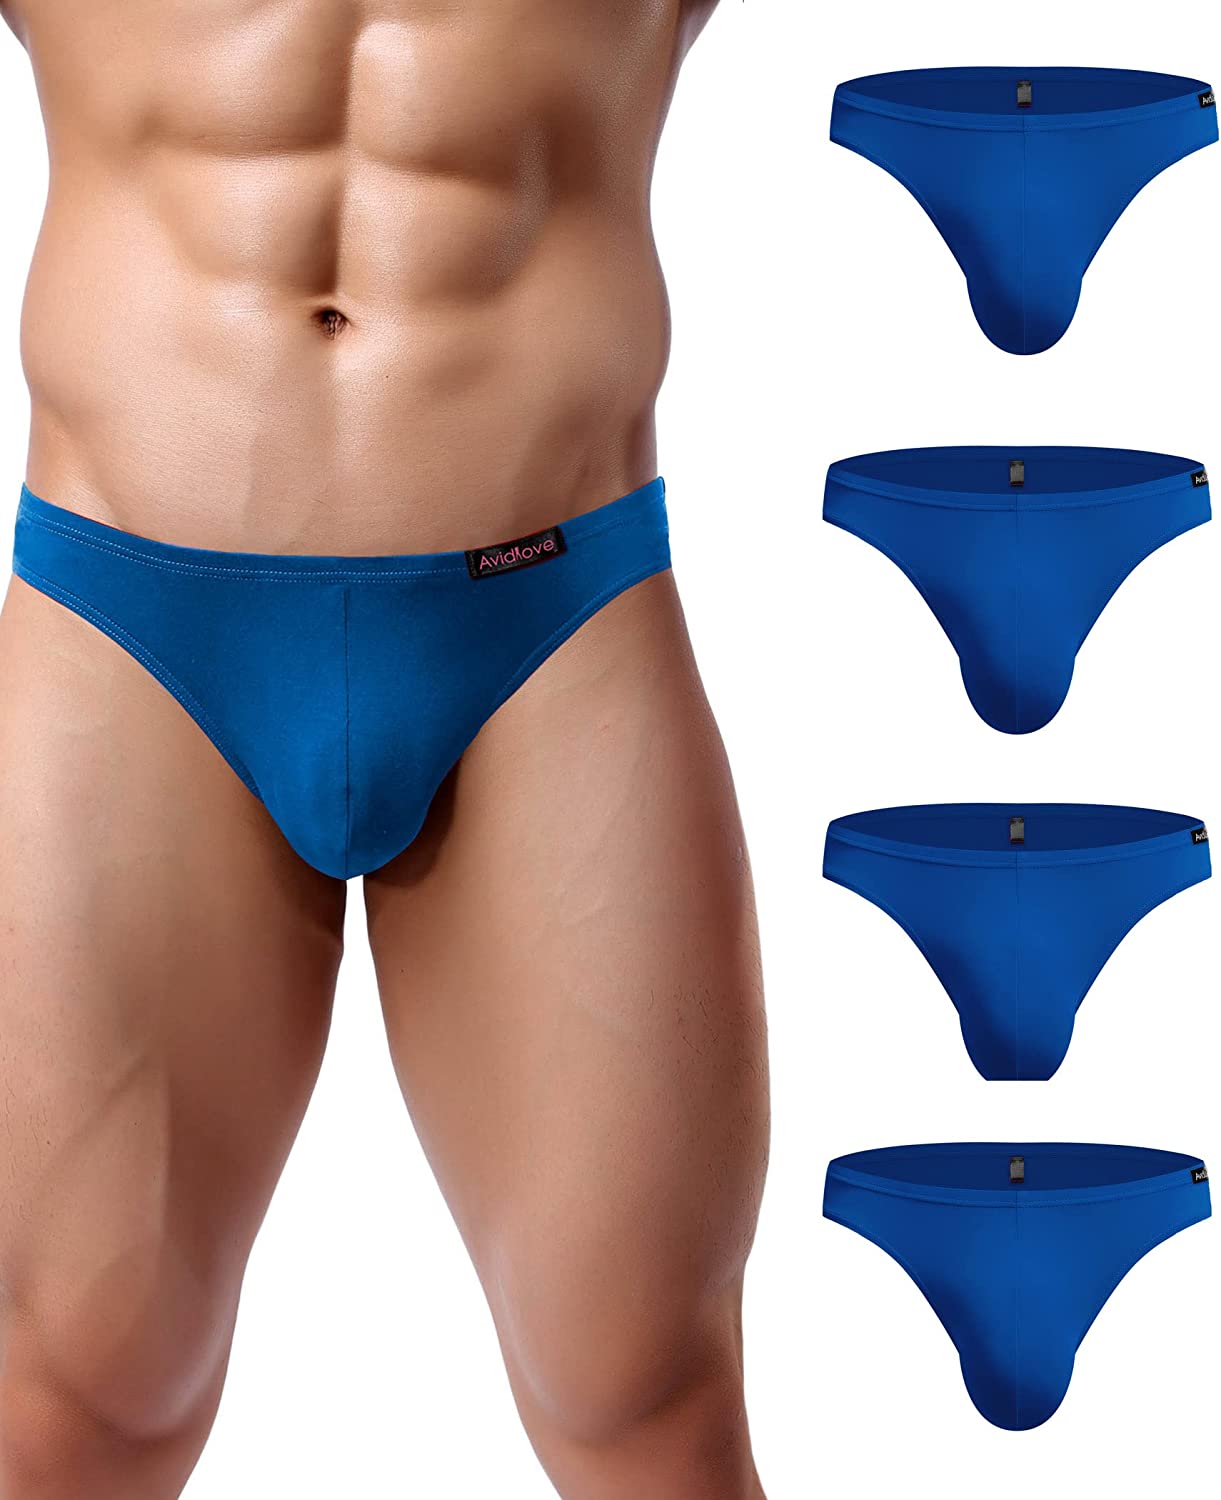 Avidlove Low Rise Briefs for Men Mens Underwear Bikini Briefs 4 Pack  Microfiber Thong Bikini Underwear（Black/Orange/Purple/Fluorescent Pink L) 